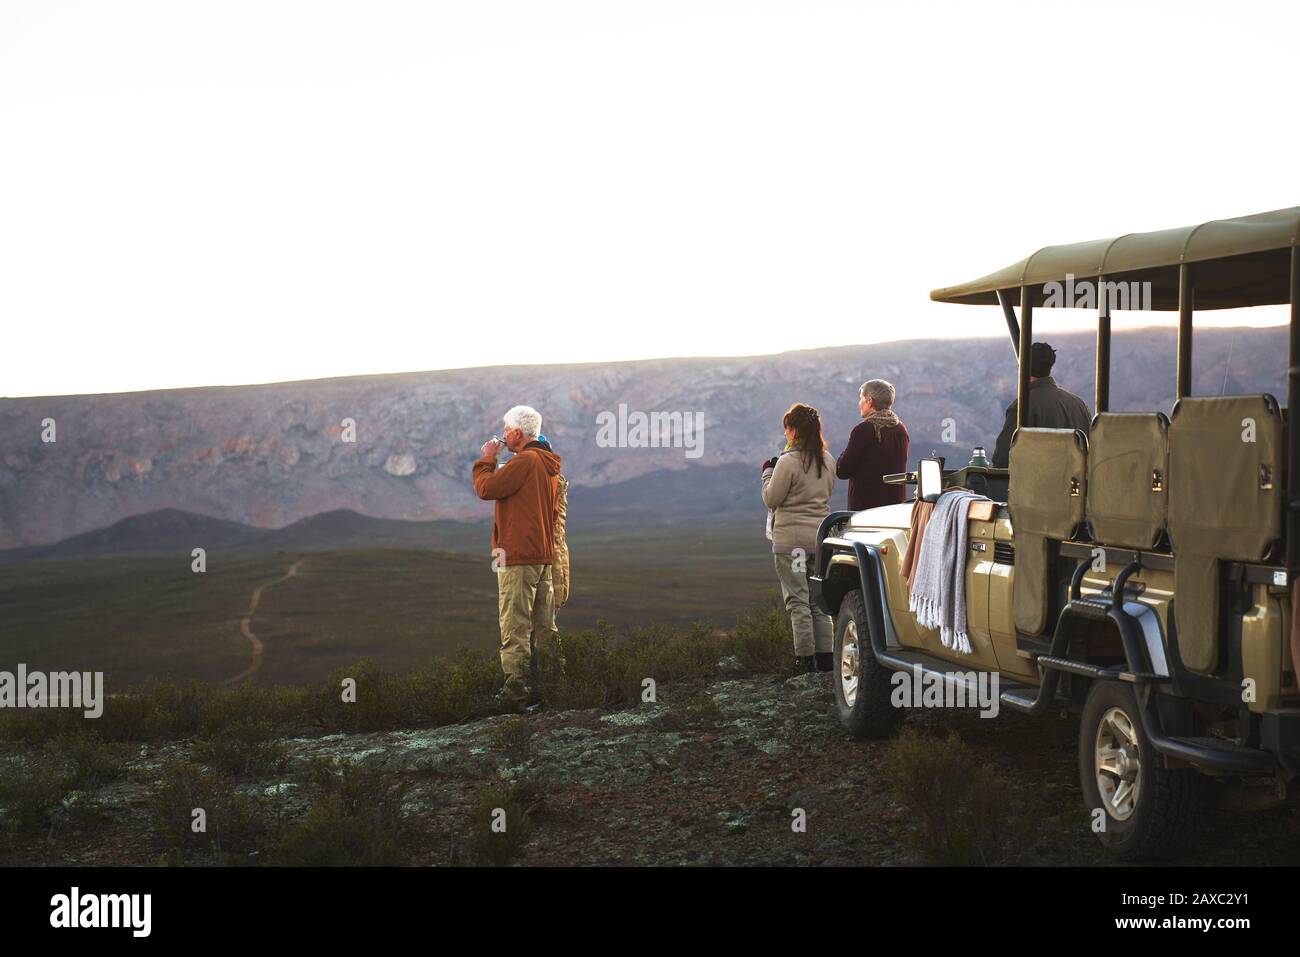 Safari tour group enjoying landscape view South Africa Stock Photo